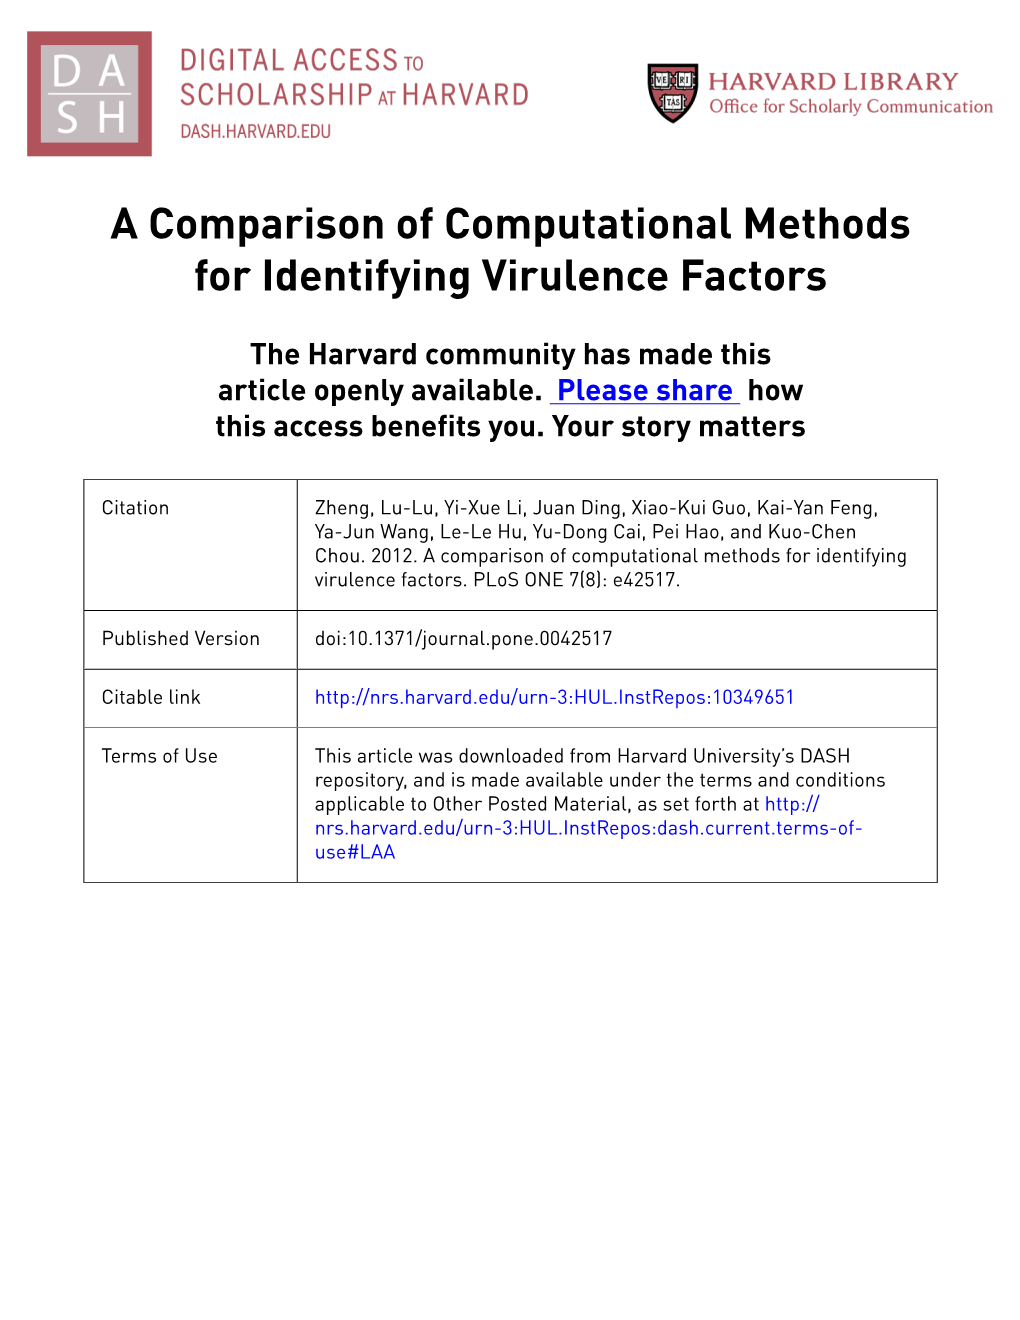 A Comparison of Computational Methods for Identifying Virulence Factors